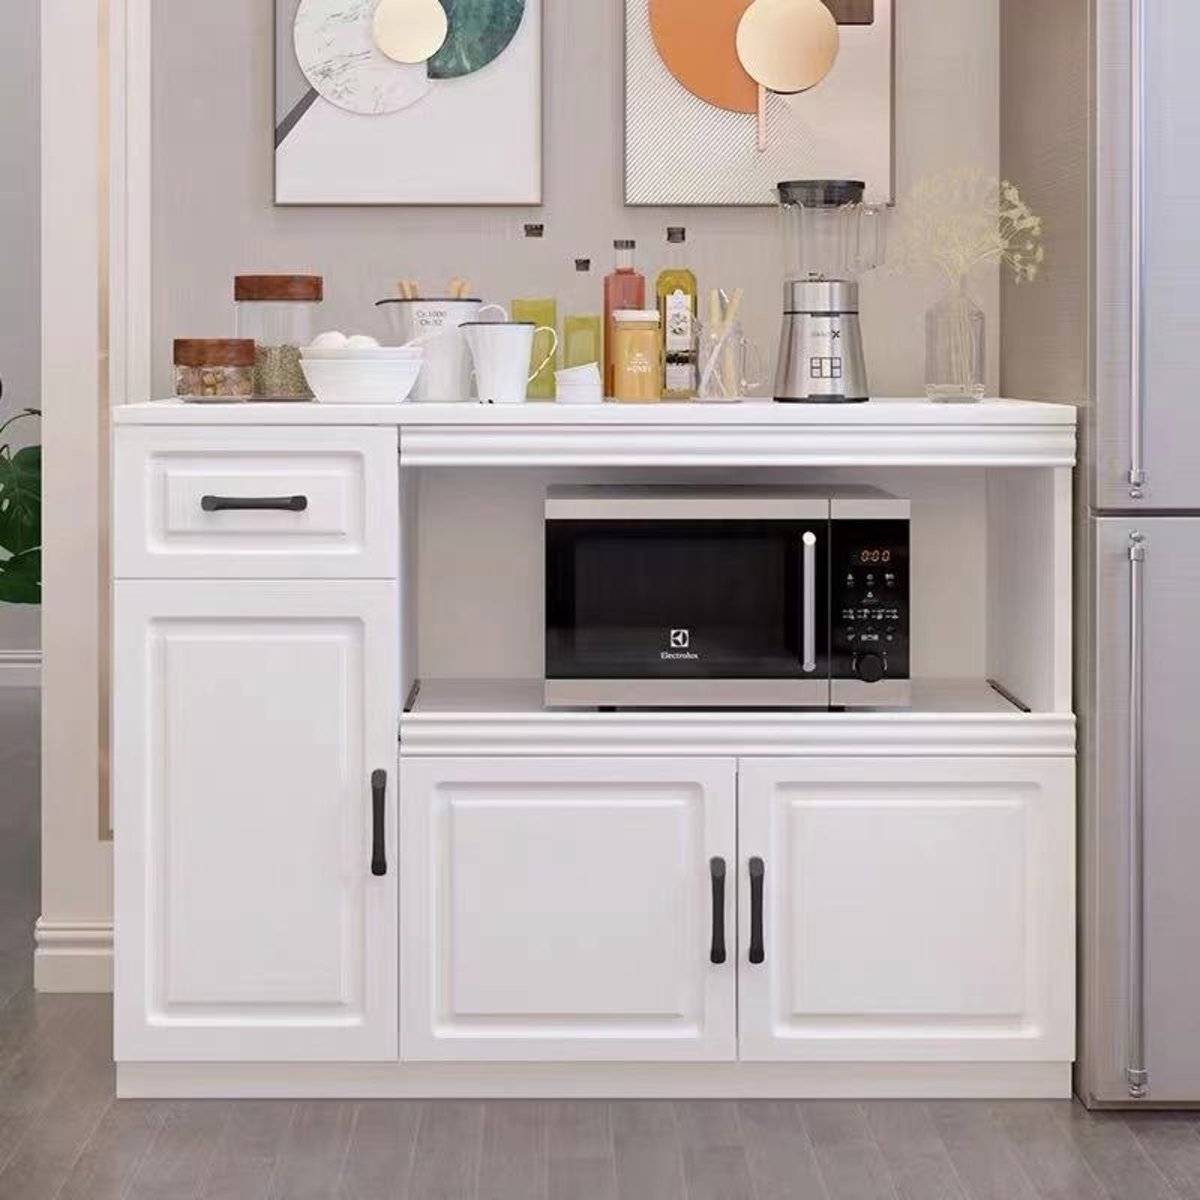 Include installation sideboard simple shelf tea cupboard kitchen cupboard storage cabinet